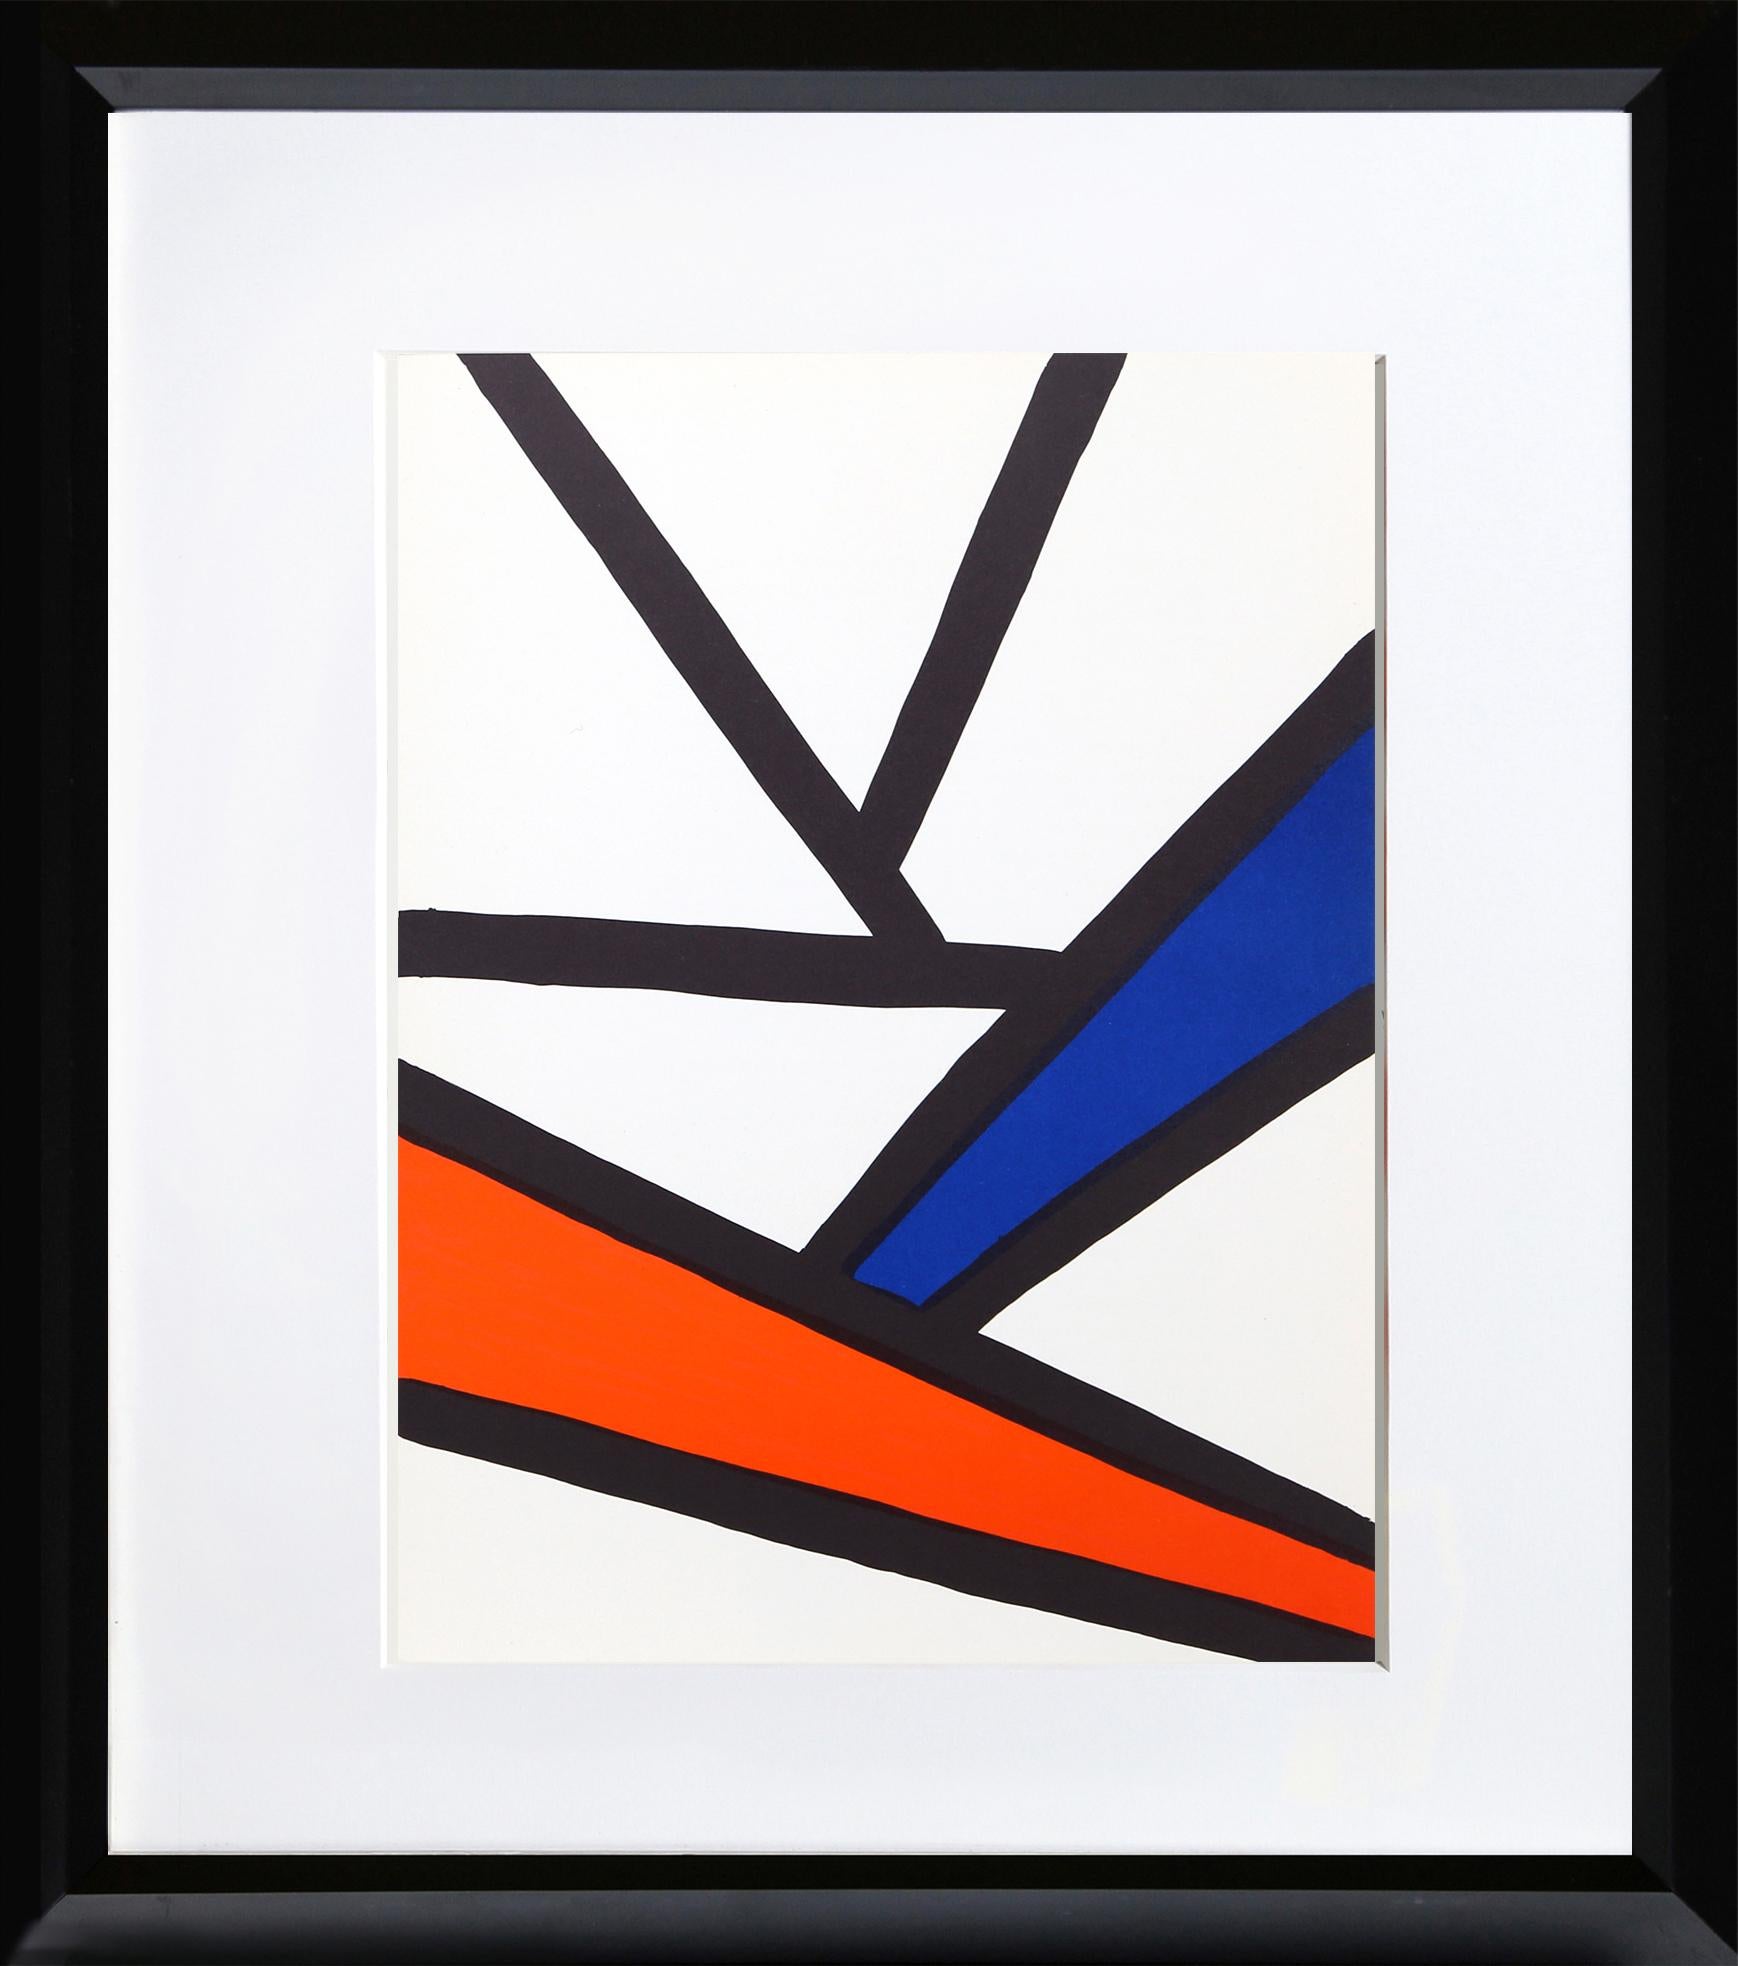 Intersections from Derriere Le Miroir by Alexander Calder, American (1898–1976)
Date: 1968
Lithograph
Size: 15 x 11 in. (38.1 x 27.94 cm)
Printer: Maeght, Paris
Publisher: Maeght Editeur, Paris